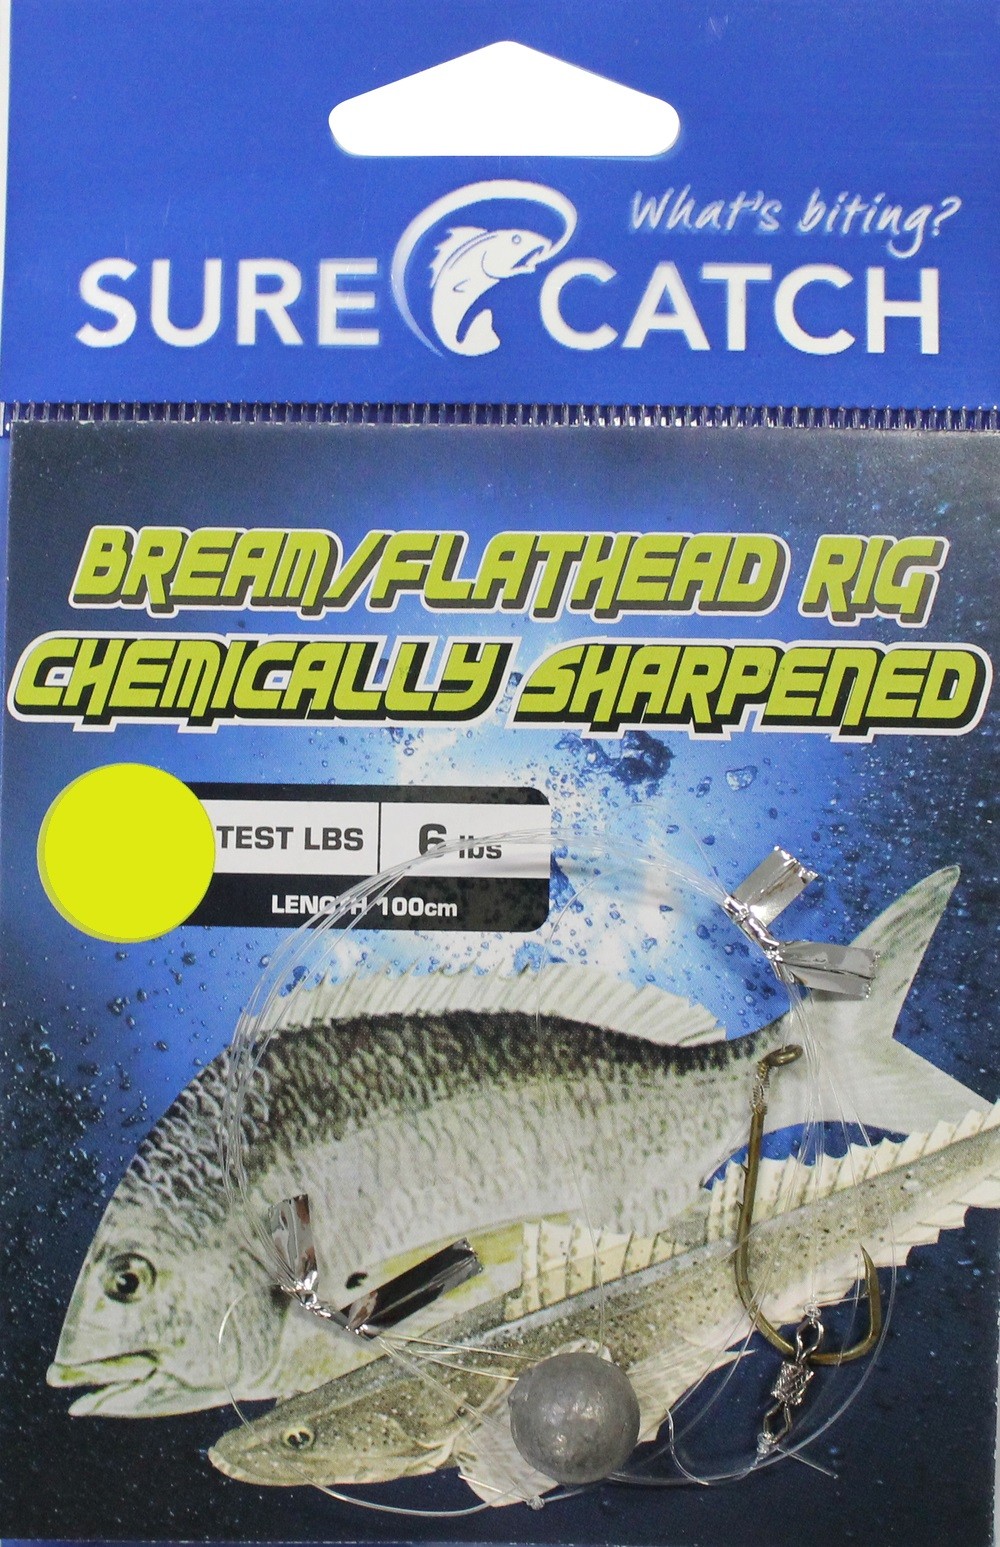 Sure Catch Bream & Flathead Rig Chem/Sharp - Size 2